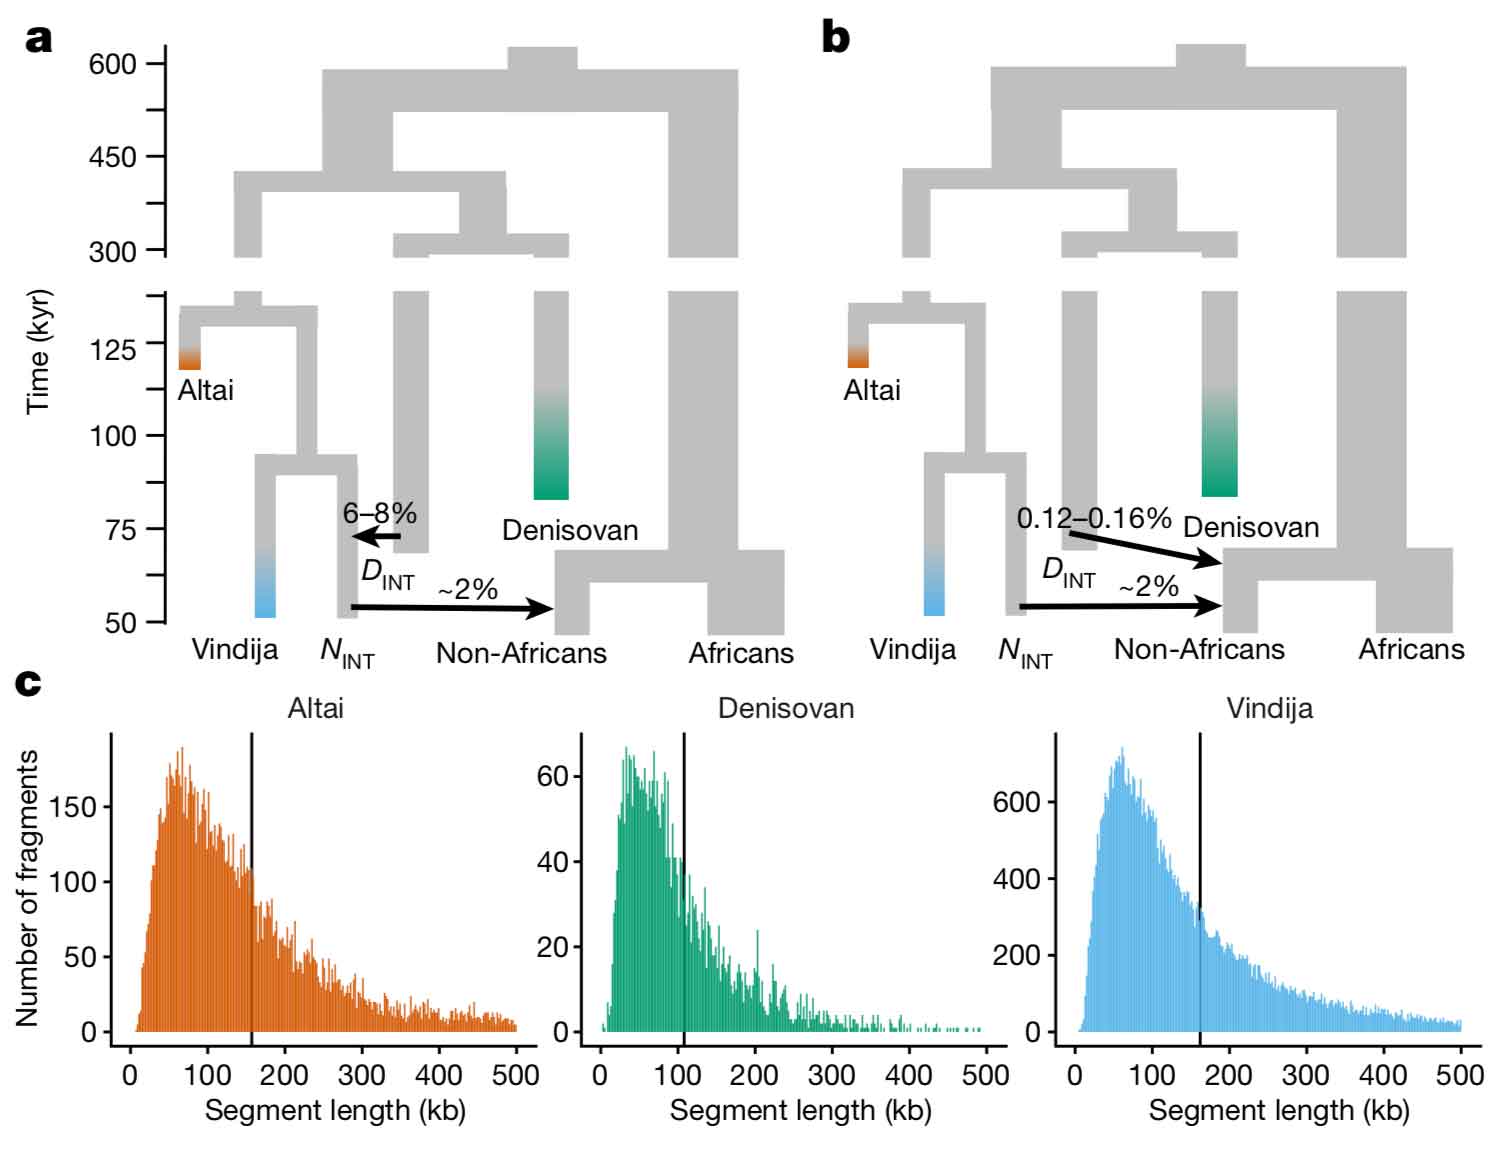 Figure 2 from Skov et al. 2020 showing models for Altai Neanderthal, Vindija Neanderthal, and Denisovan introgression